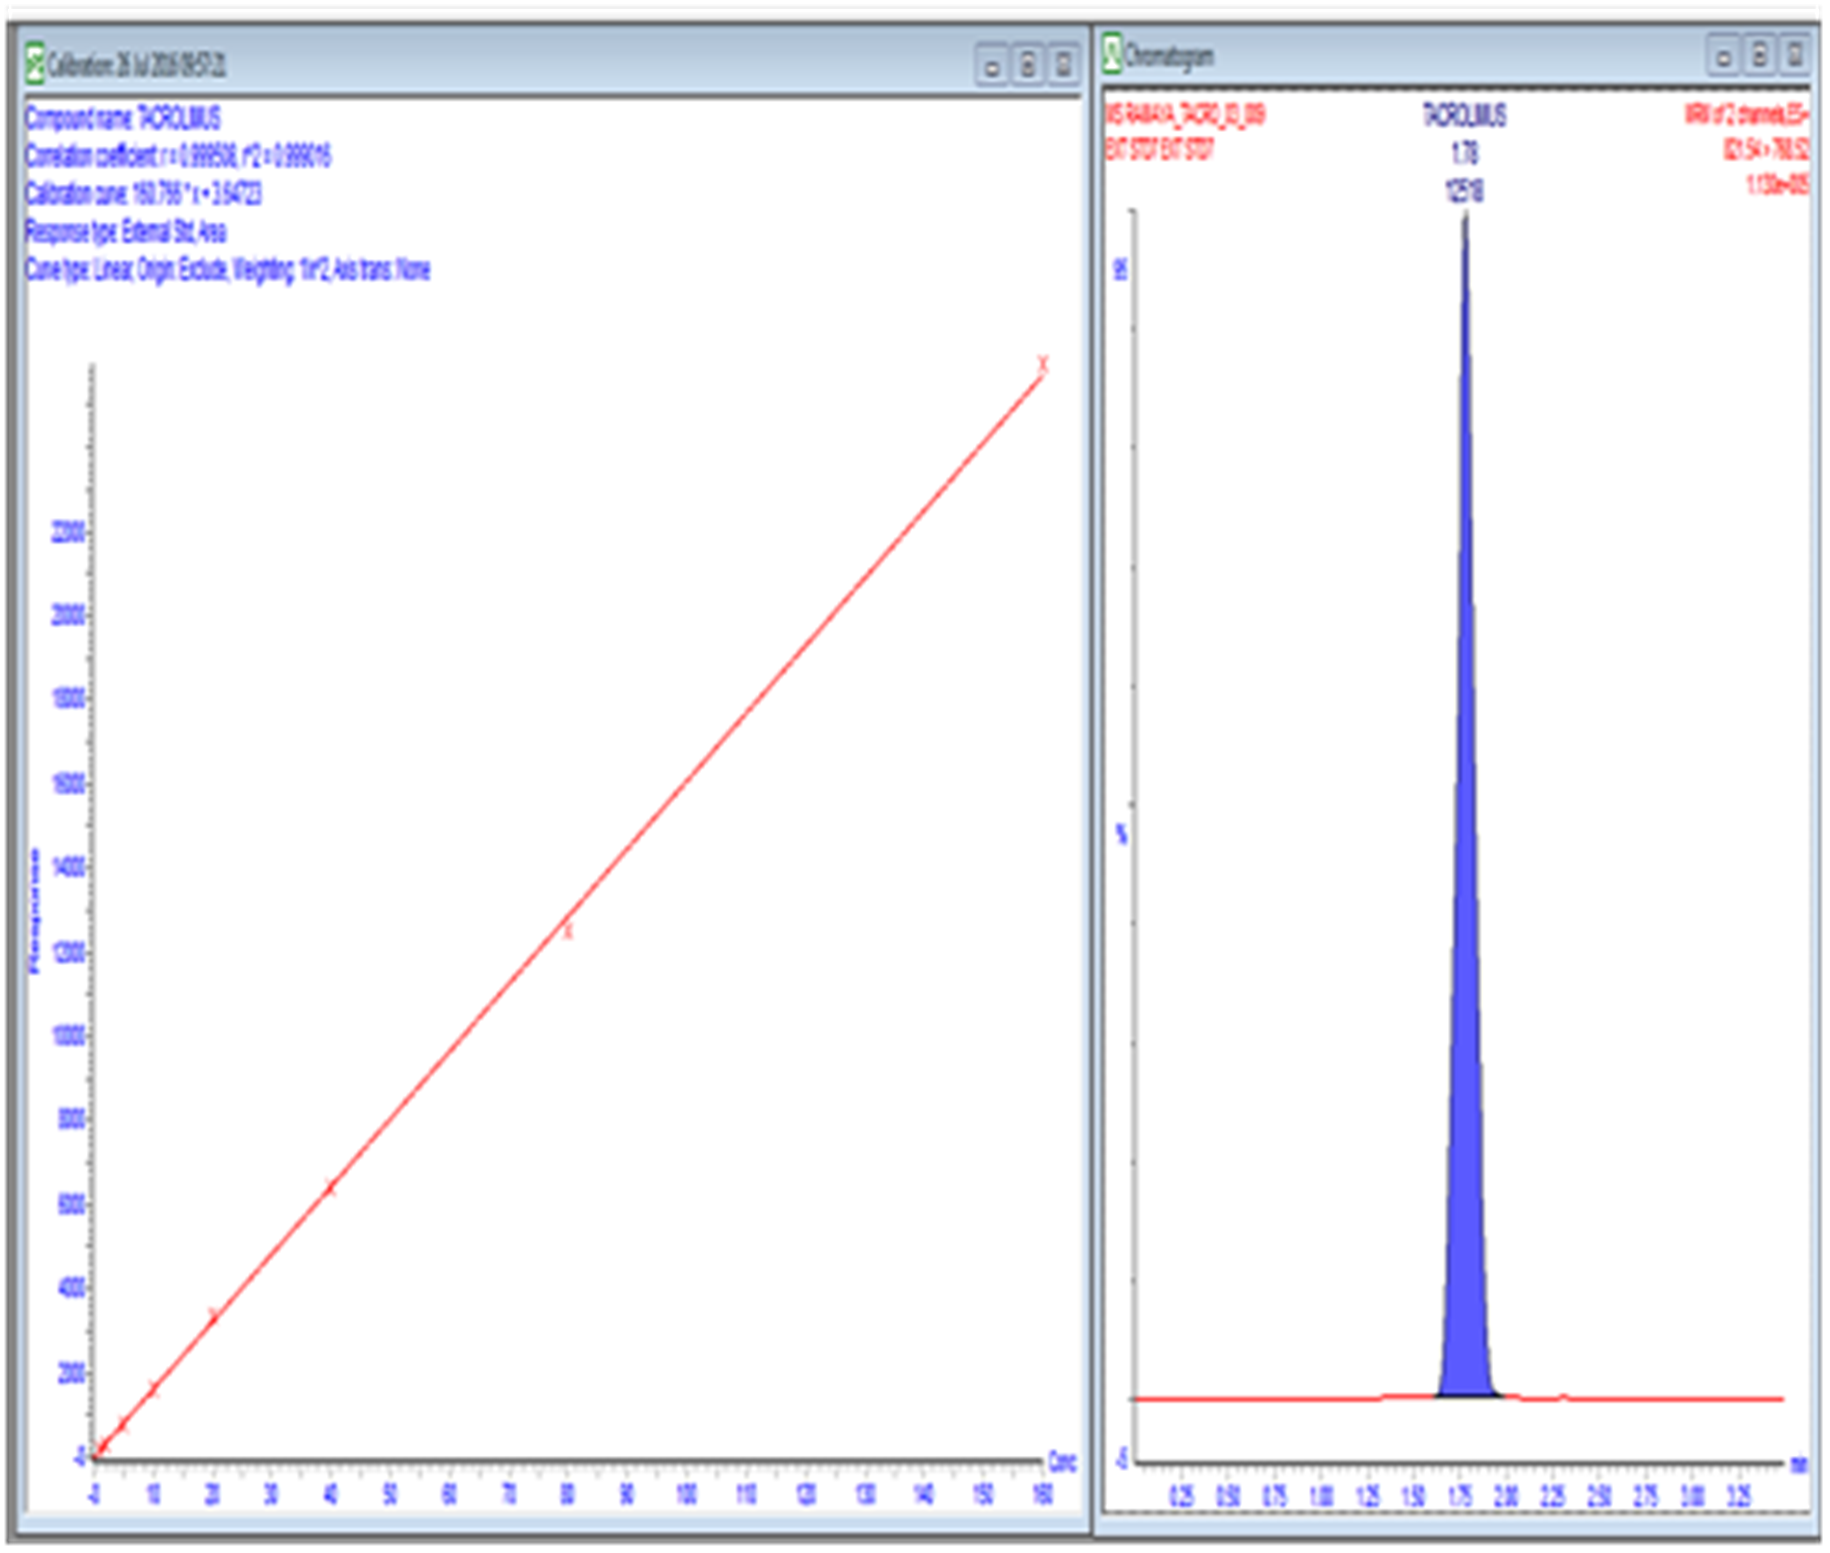 Linearity of Tacrolimus between 1 - 160 ng/ml